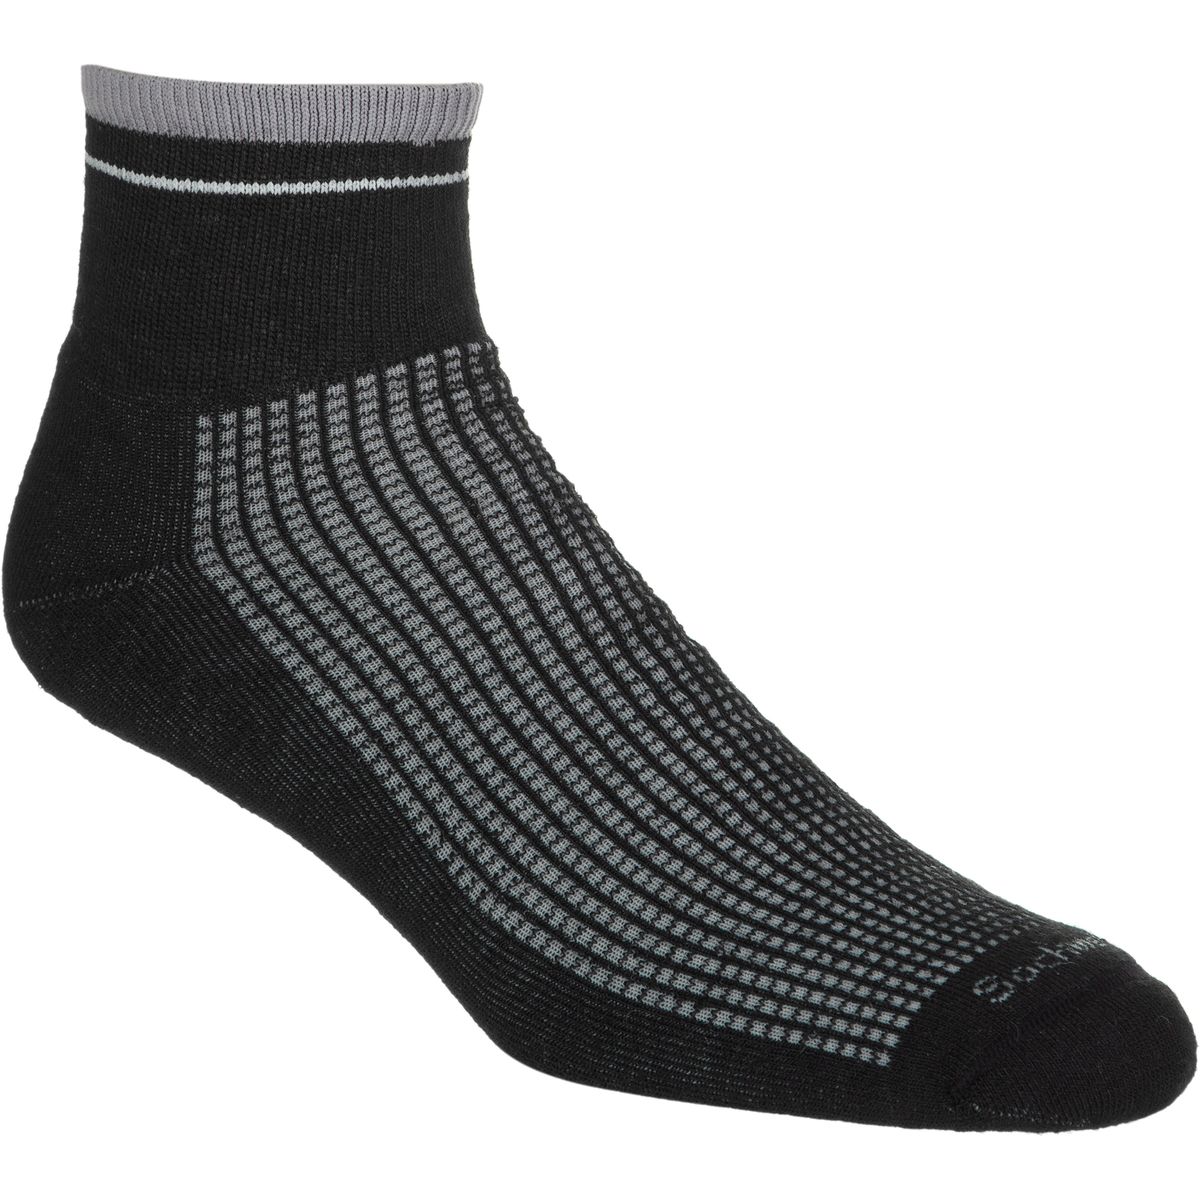 Sockwell Relaxed Fit Quarter/Diabetic Socks - Men's - Accessories